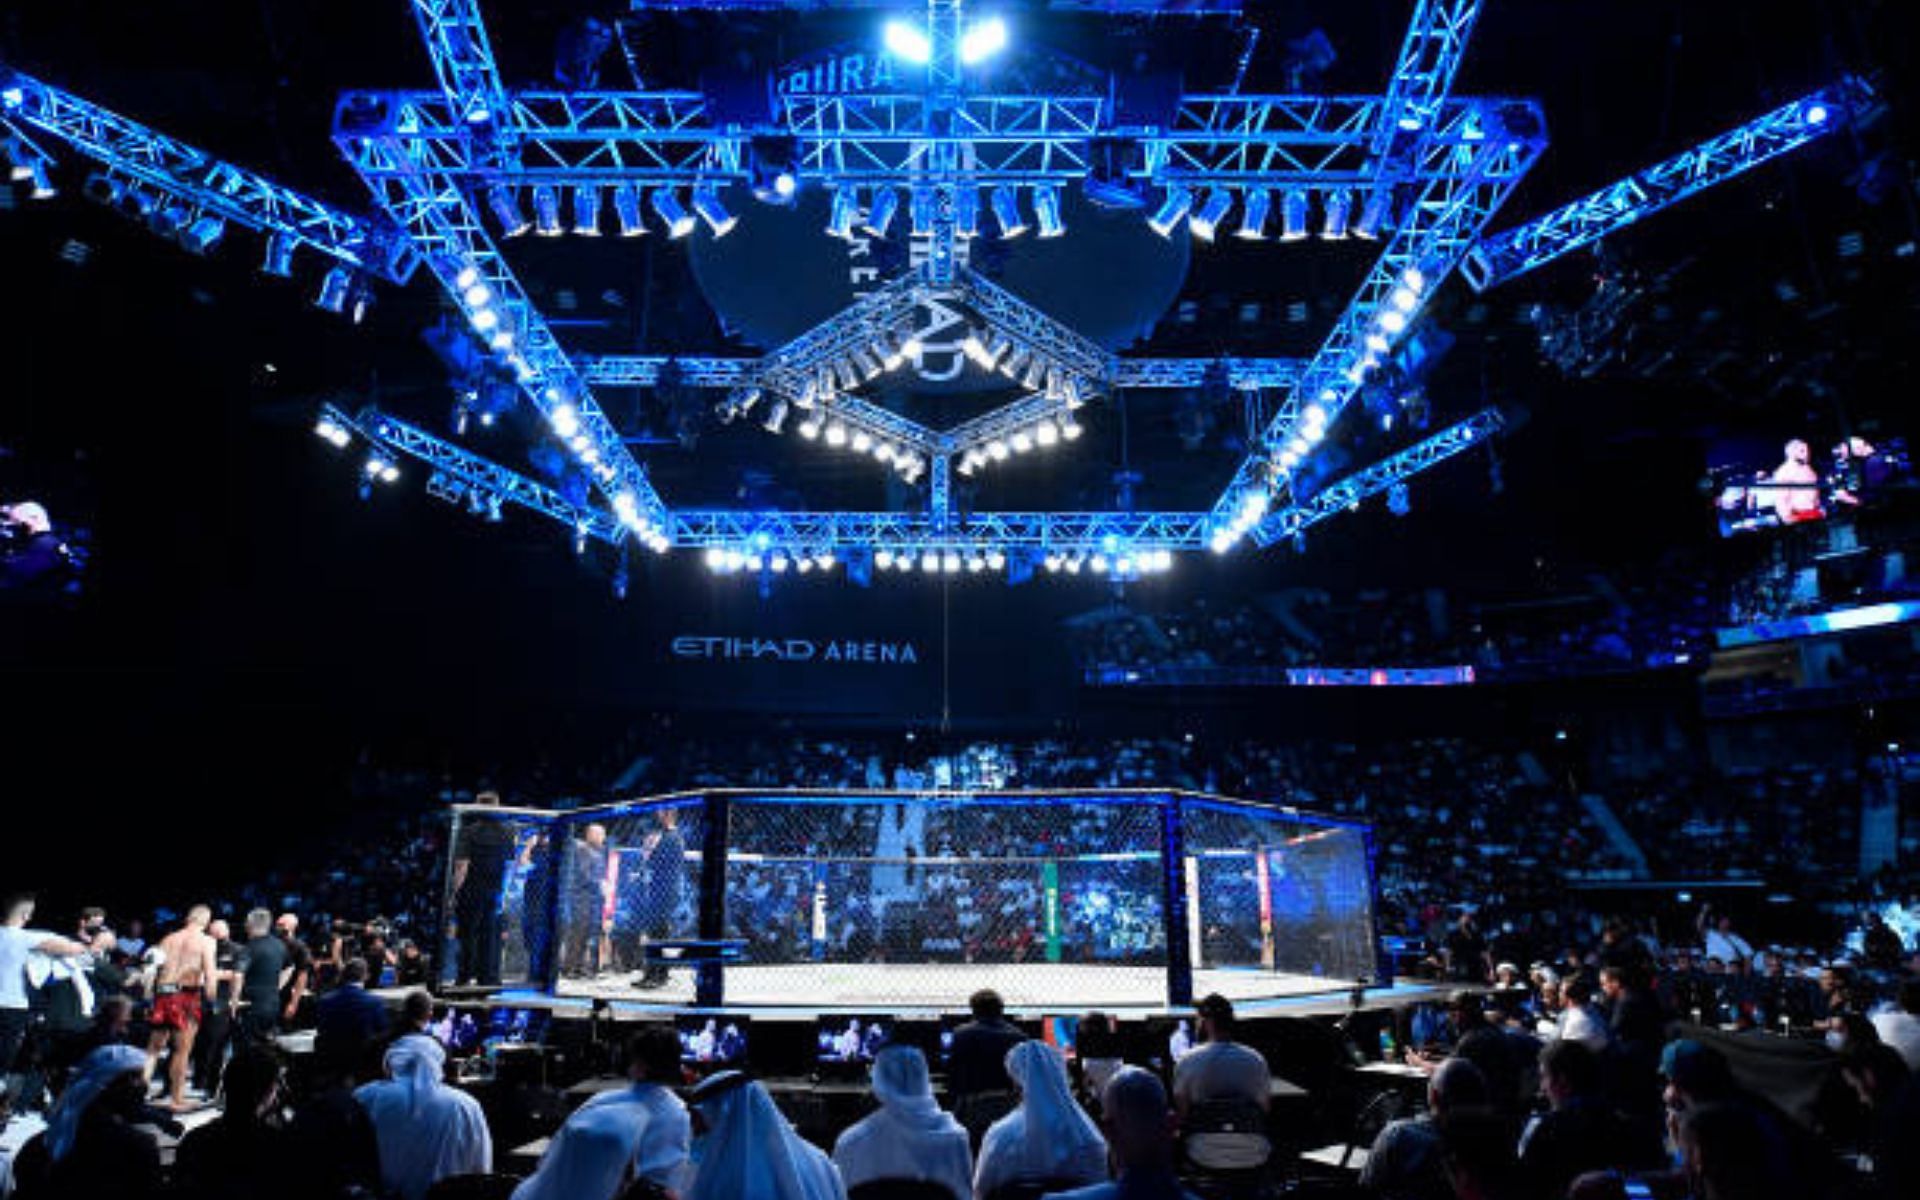 UFC octagon at the Ethiad Arena in Abu Dhabi